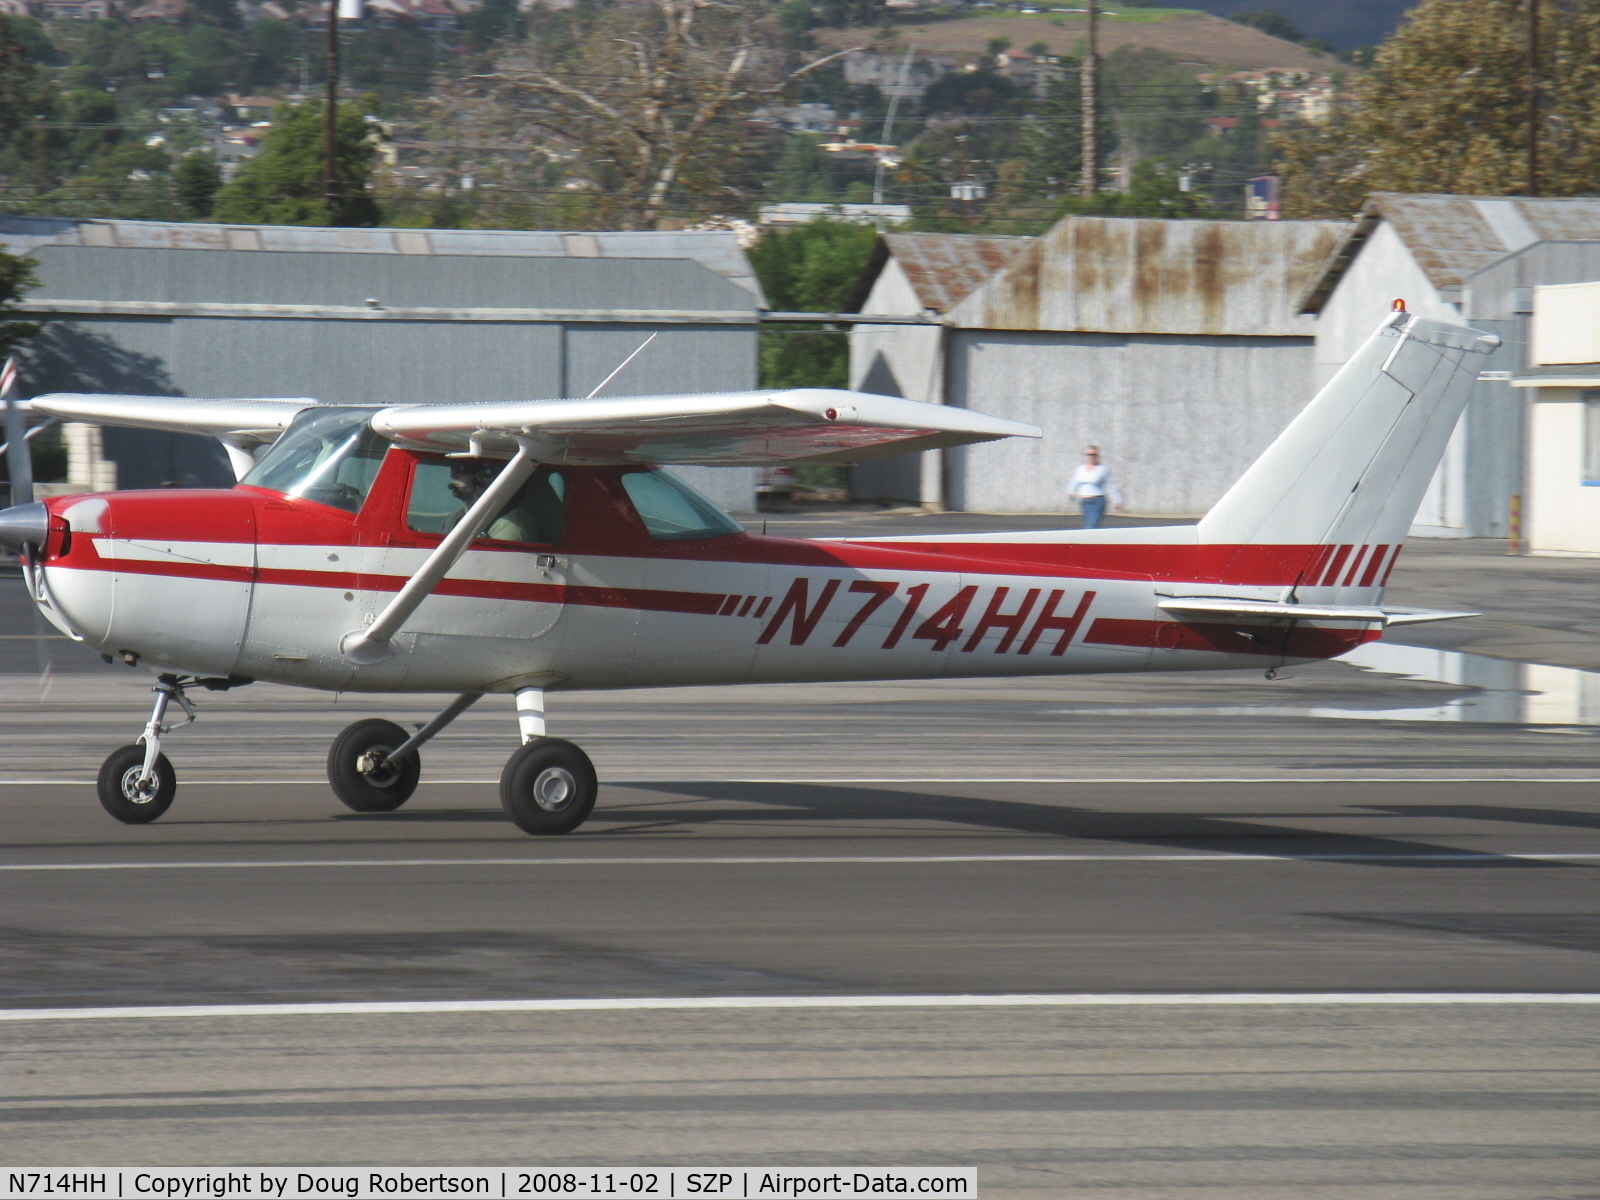 N714HH, 1977 Cessna 150M C/N 15079185, 1977 Cessna 150M, Continental O-200 100 Hp, landing roll Rwy 22